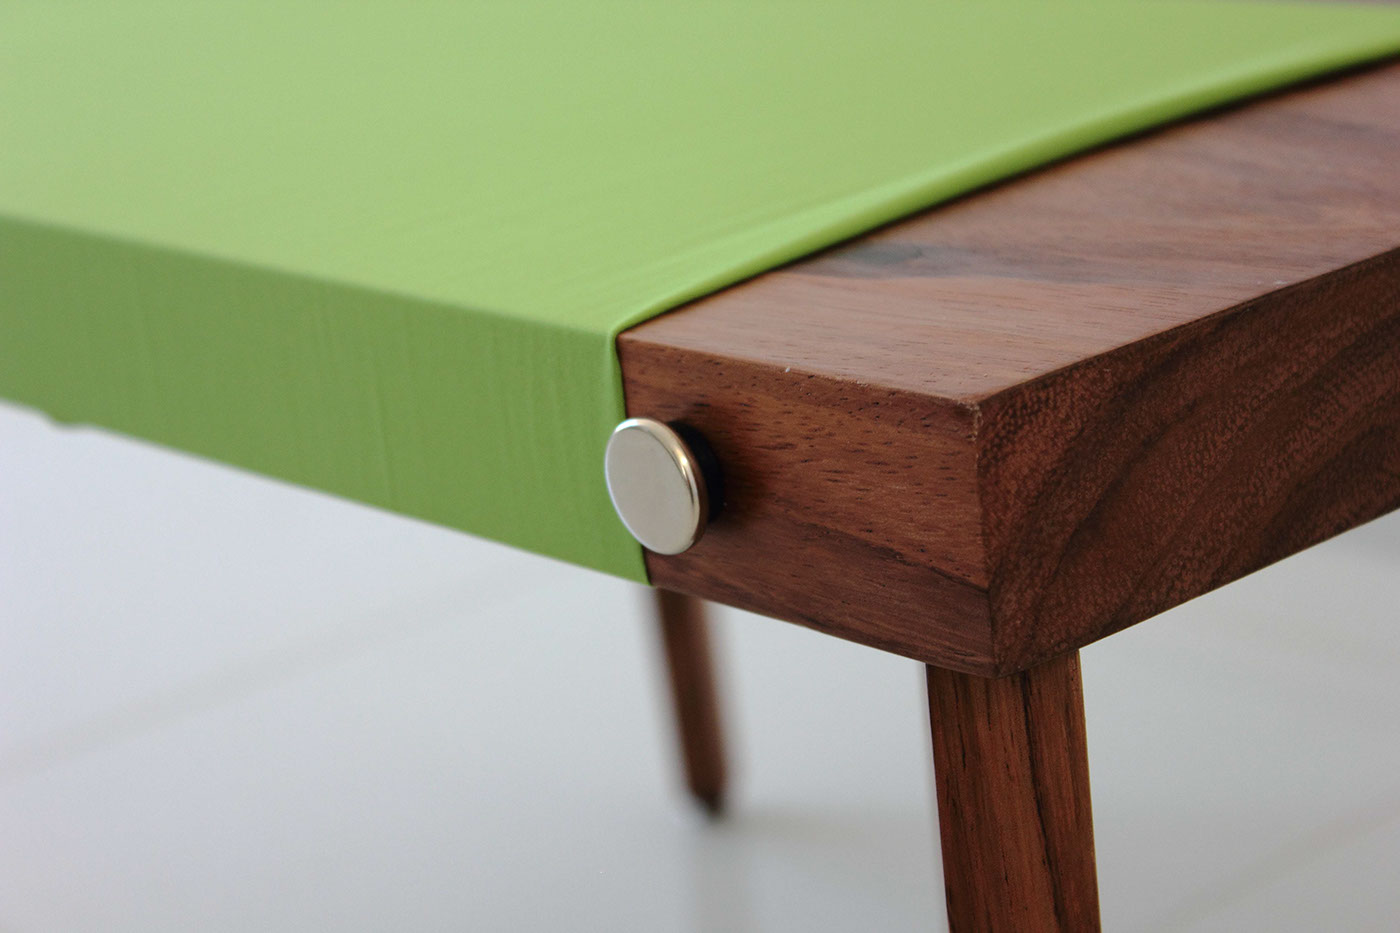 Le Petit Prince table furniture adolfo navarro green wood Interior Mexican Design Shelf repisa mesa el principito concept design